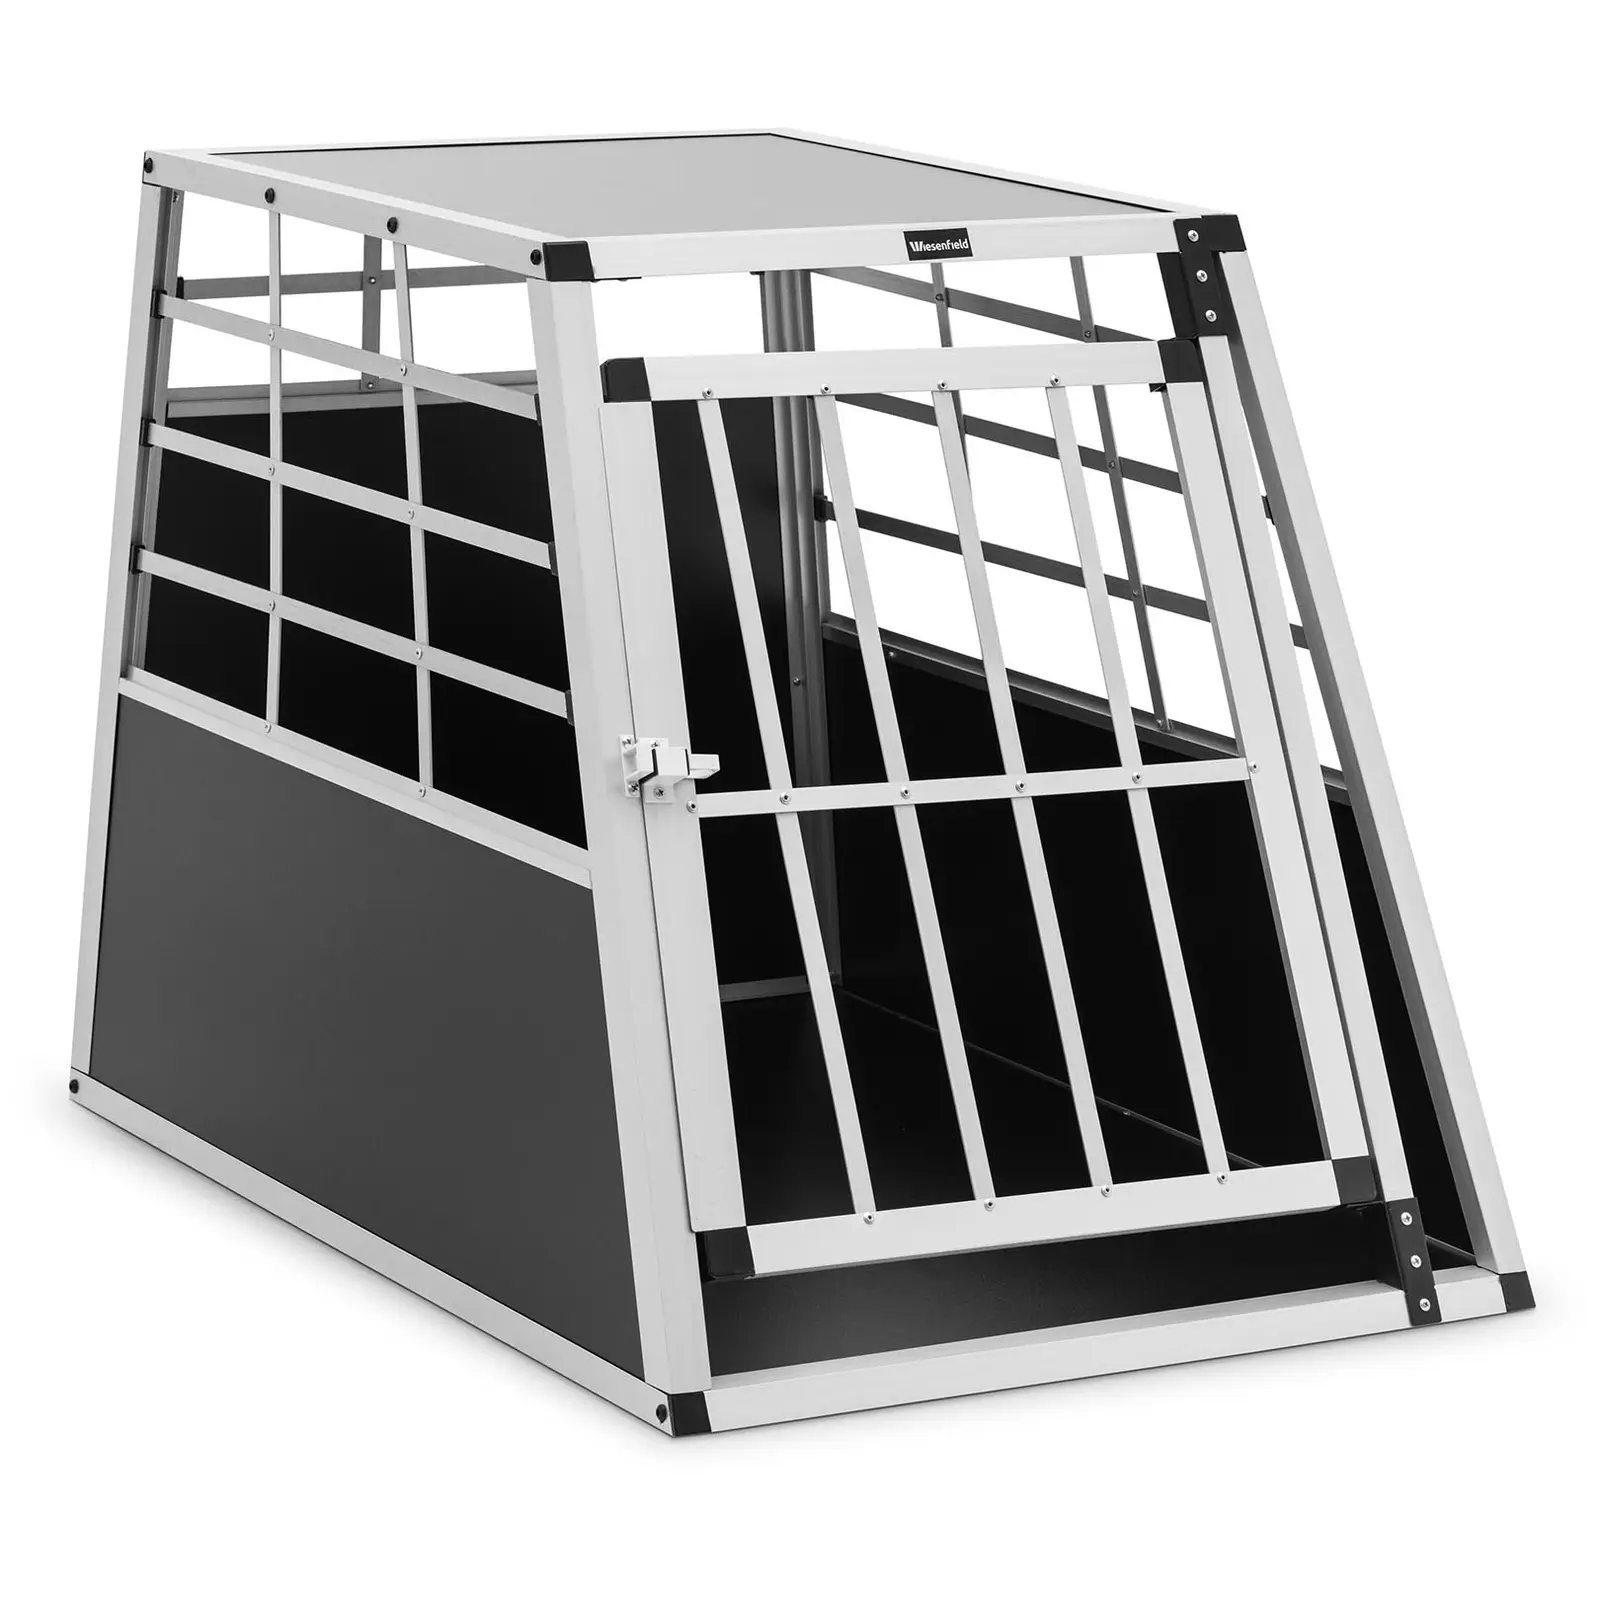 B-Ware Hundetransportbox - Aluminium - Trapezform - 91 x 65 x 70 cm